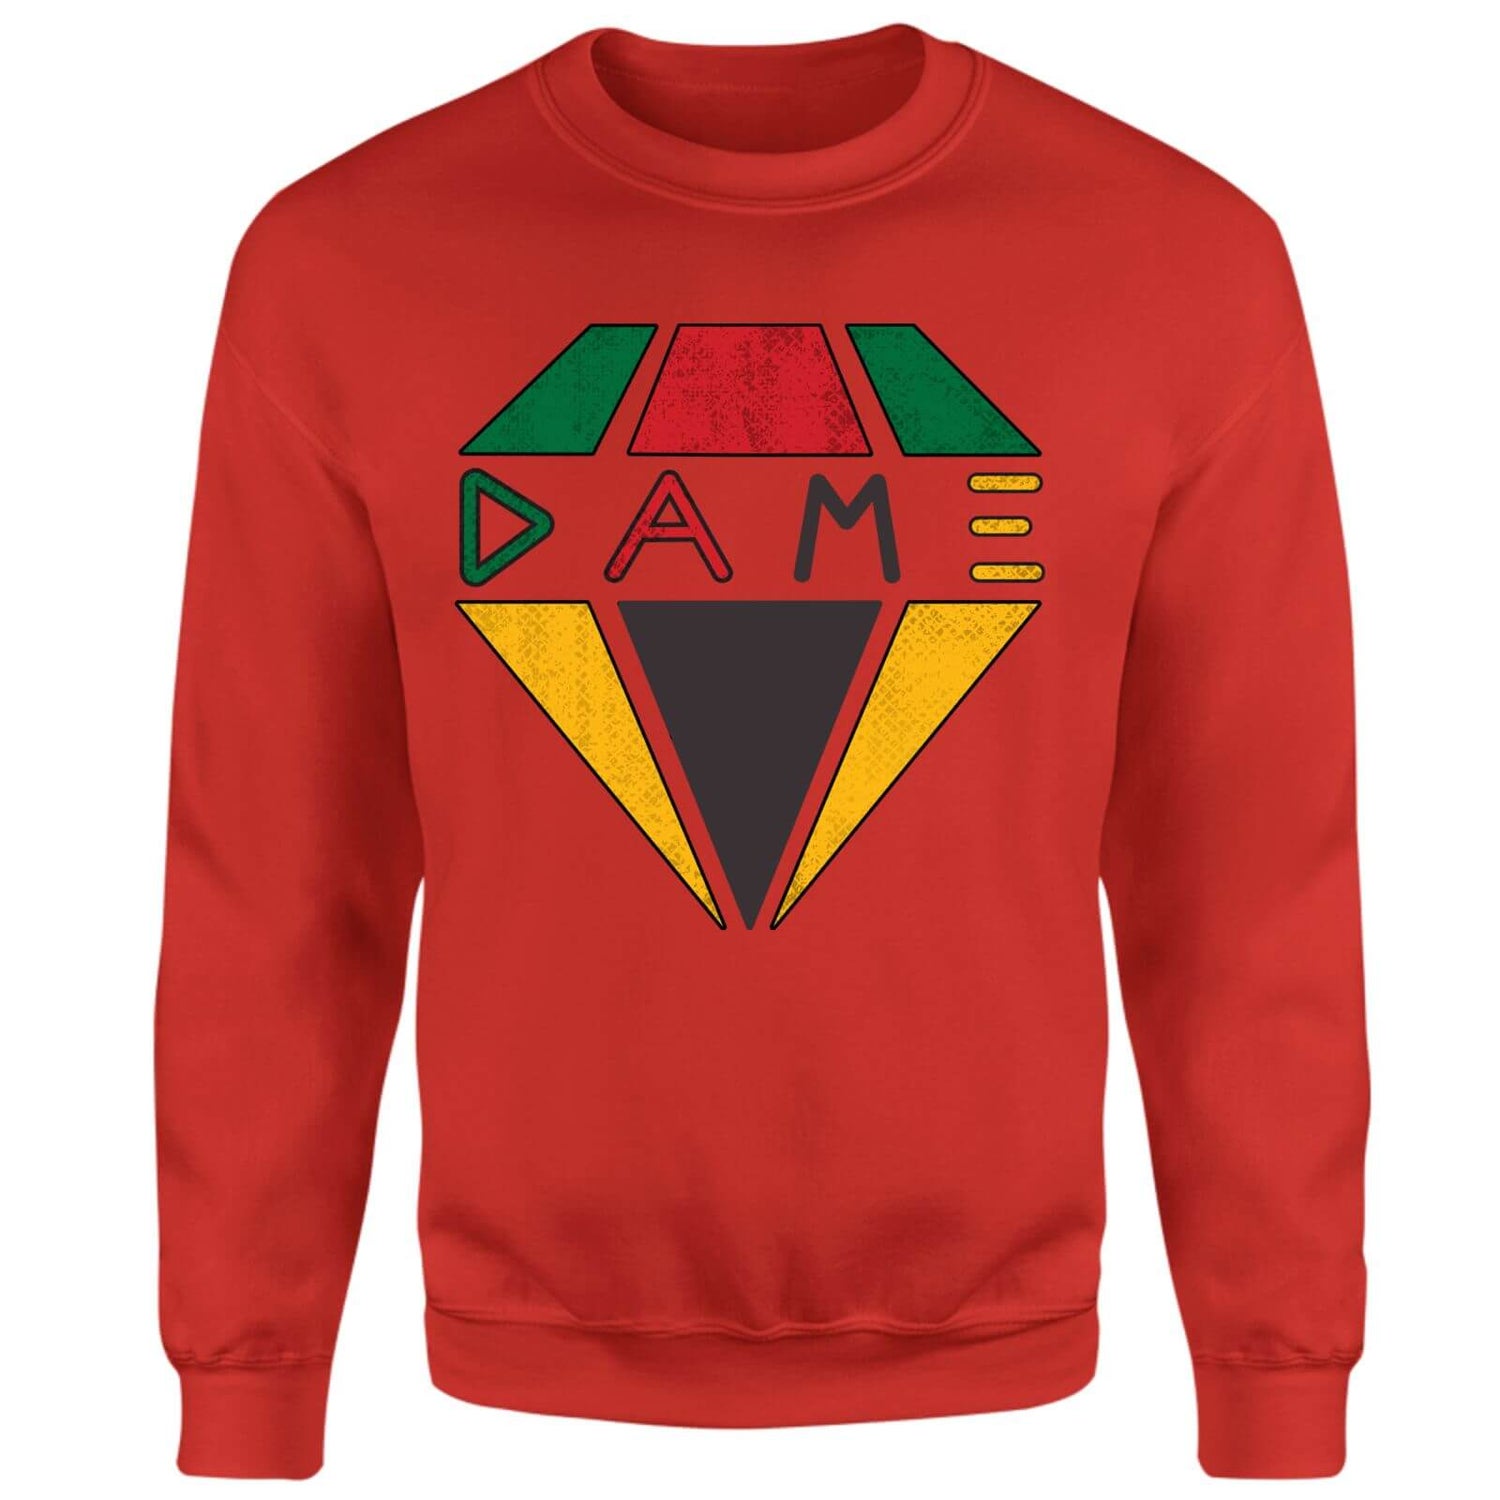 Creed DAME Diamond Logo Sweatshirt - Red